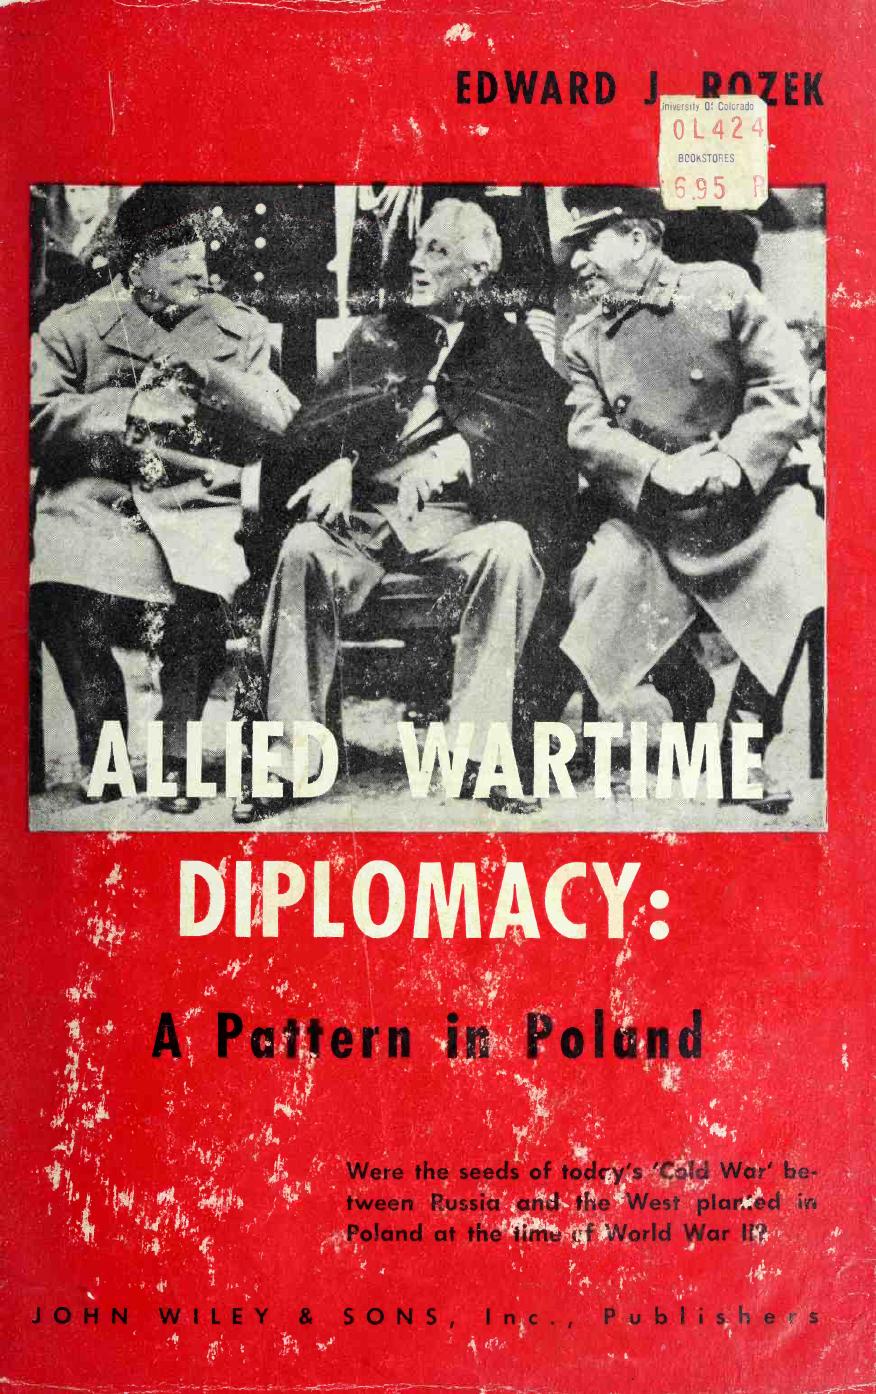 Allied Wartime Diplomacy - A Pattern in Poland (1957) by Edward J. Rozek